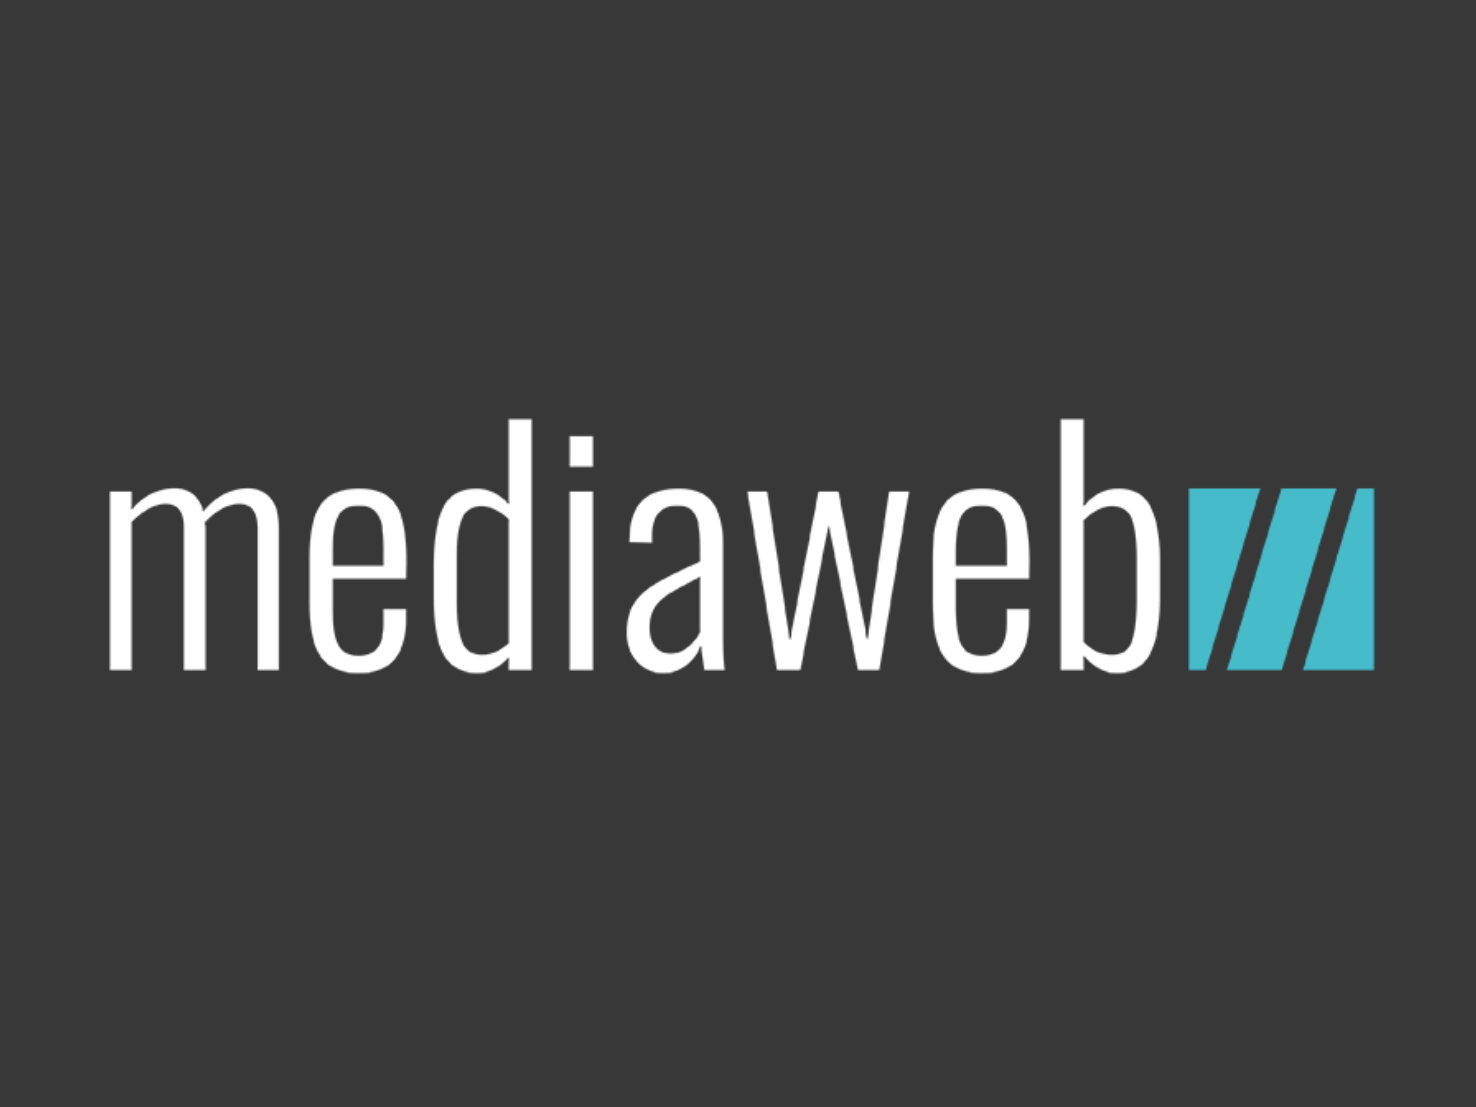 Mediaweb GbR Webagentur & Werbeagentur / Bernhard Schlotter & Diana Kurek